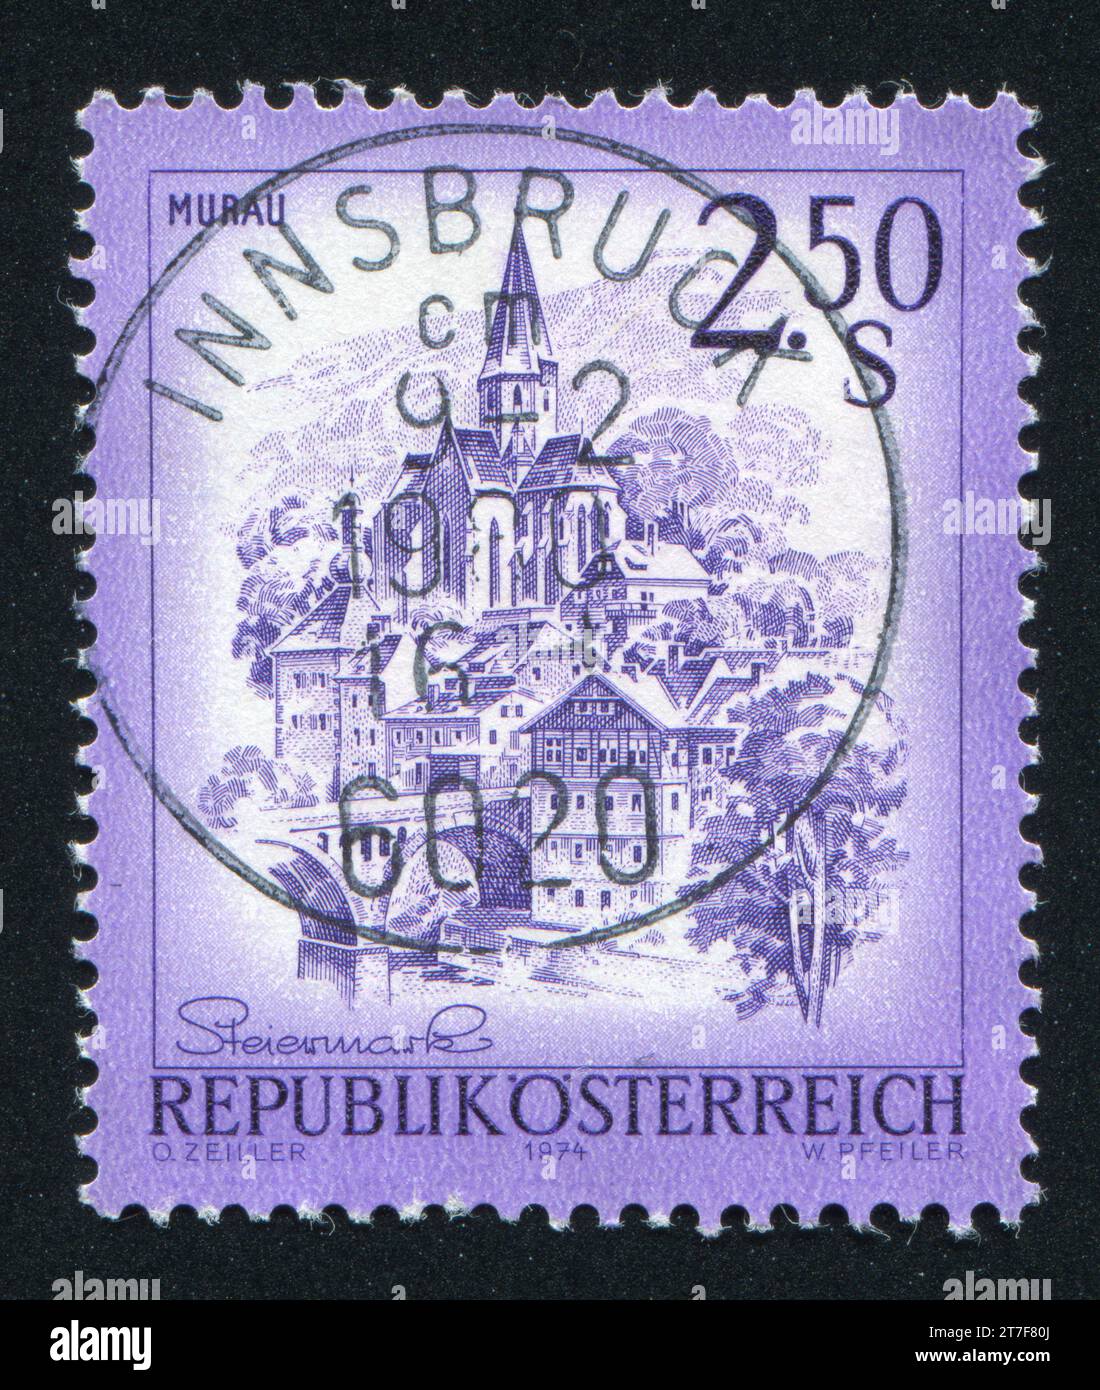 AUSTRIA - CIRCA 1974: stamp printed by Austria, shows Murau, circa 1974 Stock Photo